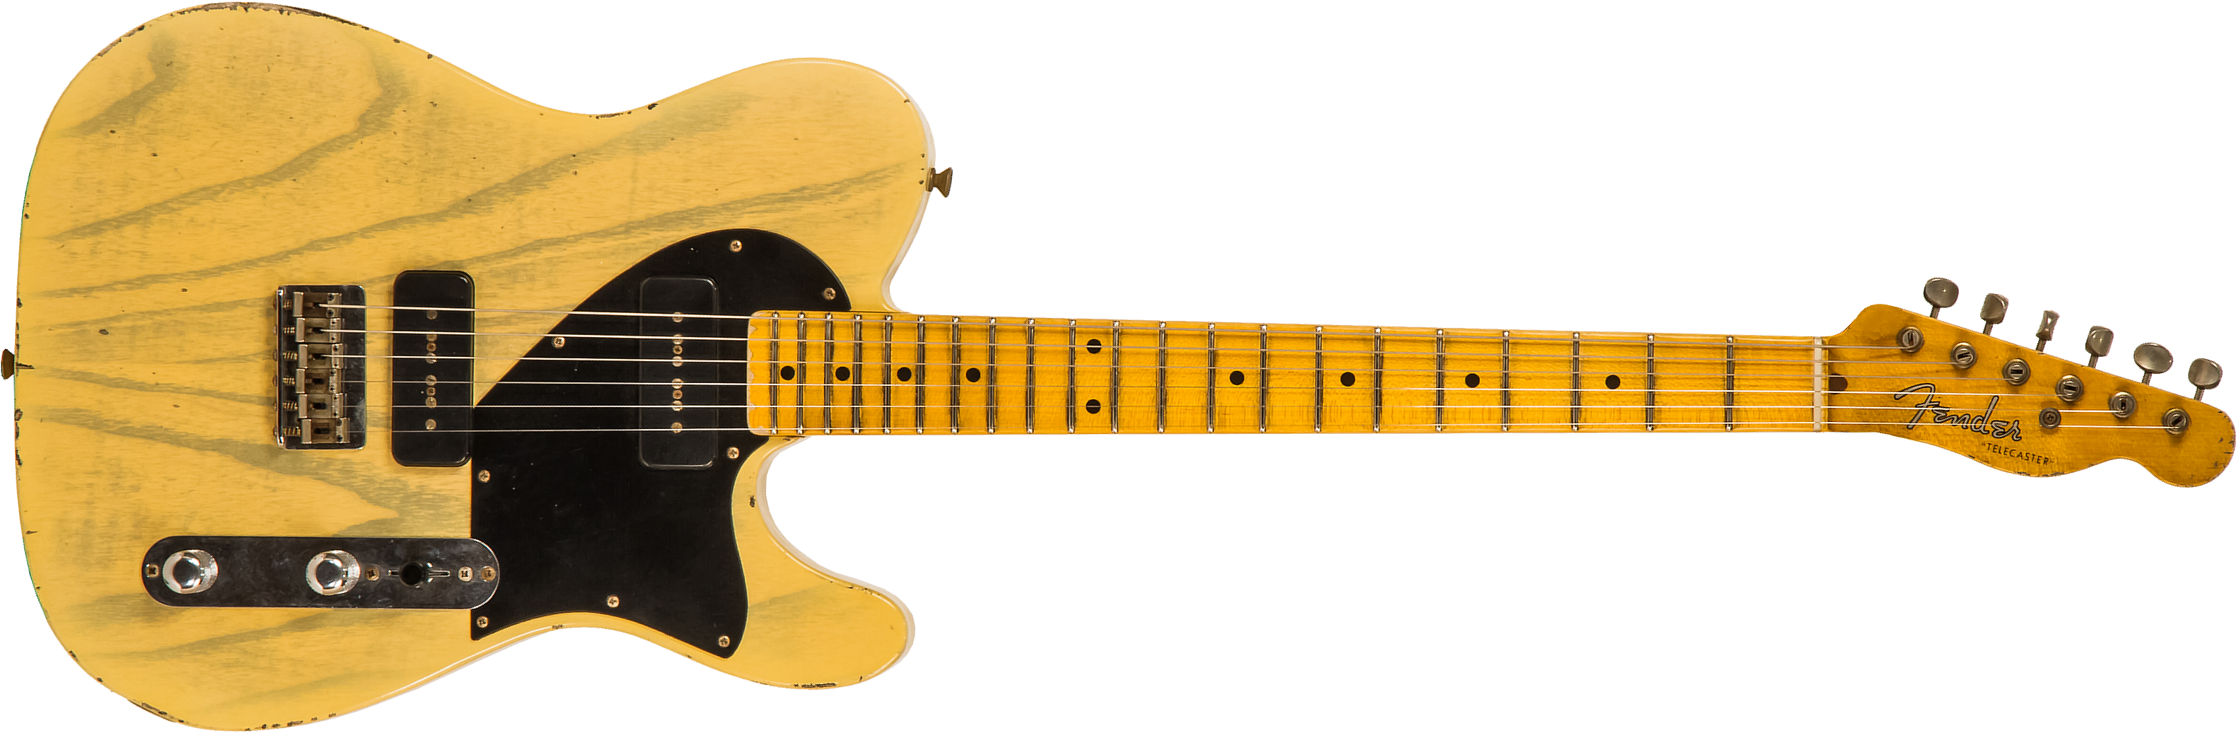 Fender Custom Shop Tele 1950 Masterbuilt J.smith Mn #r116221 - Relic Nocaster Blonde - Guitarra eléctrica con forma de tel - Main picture